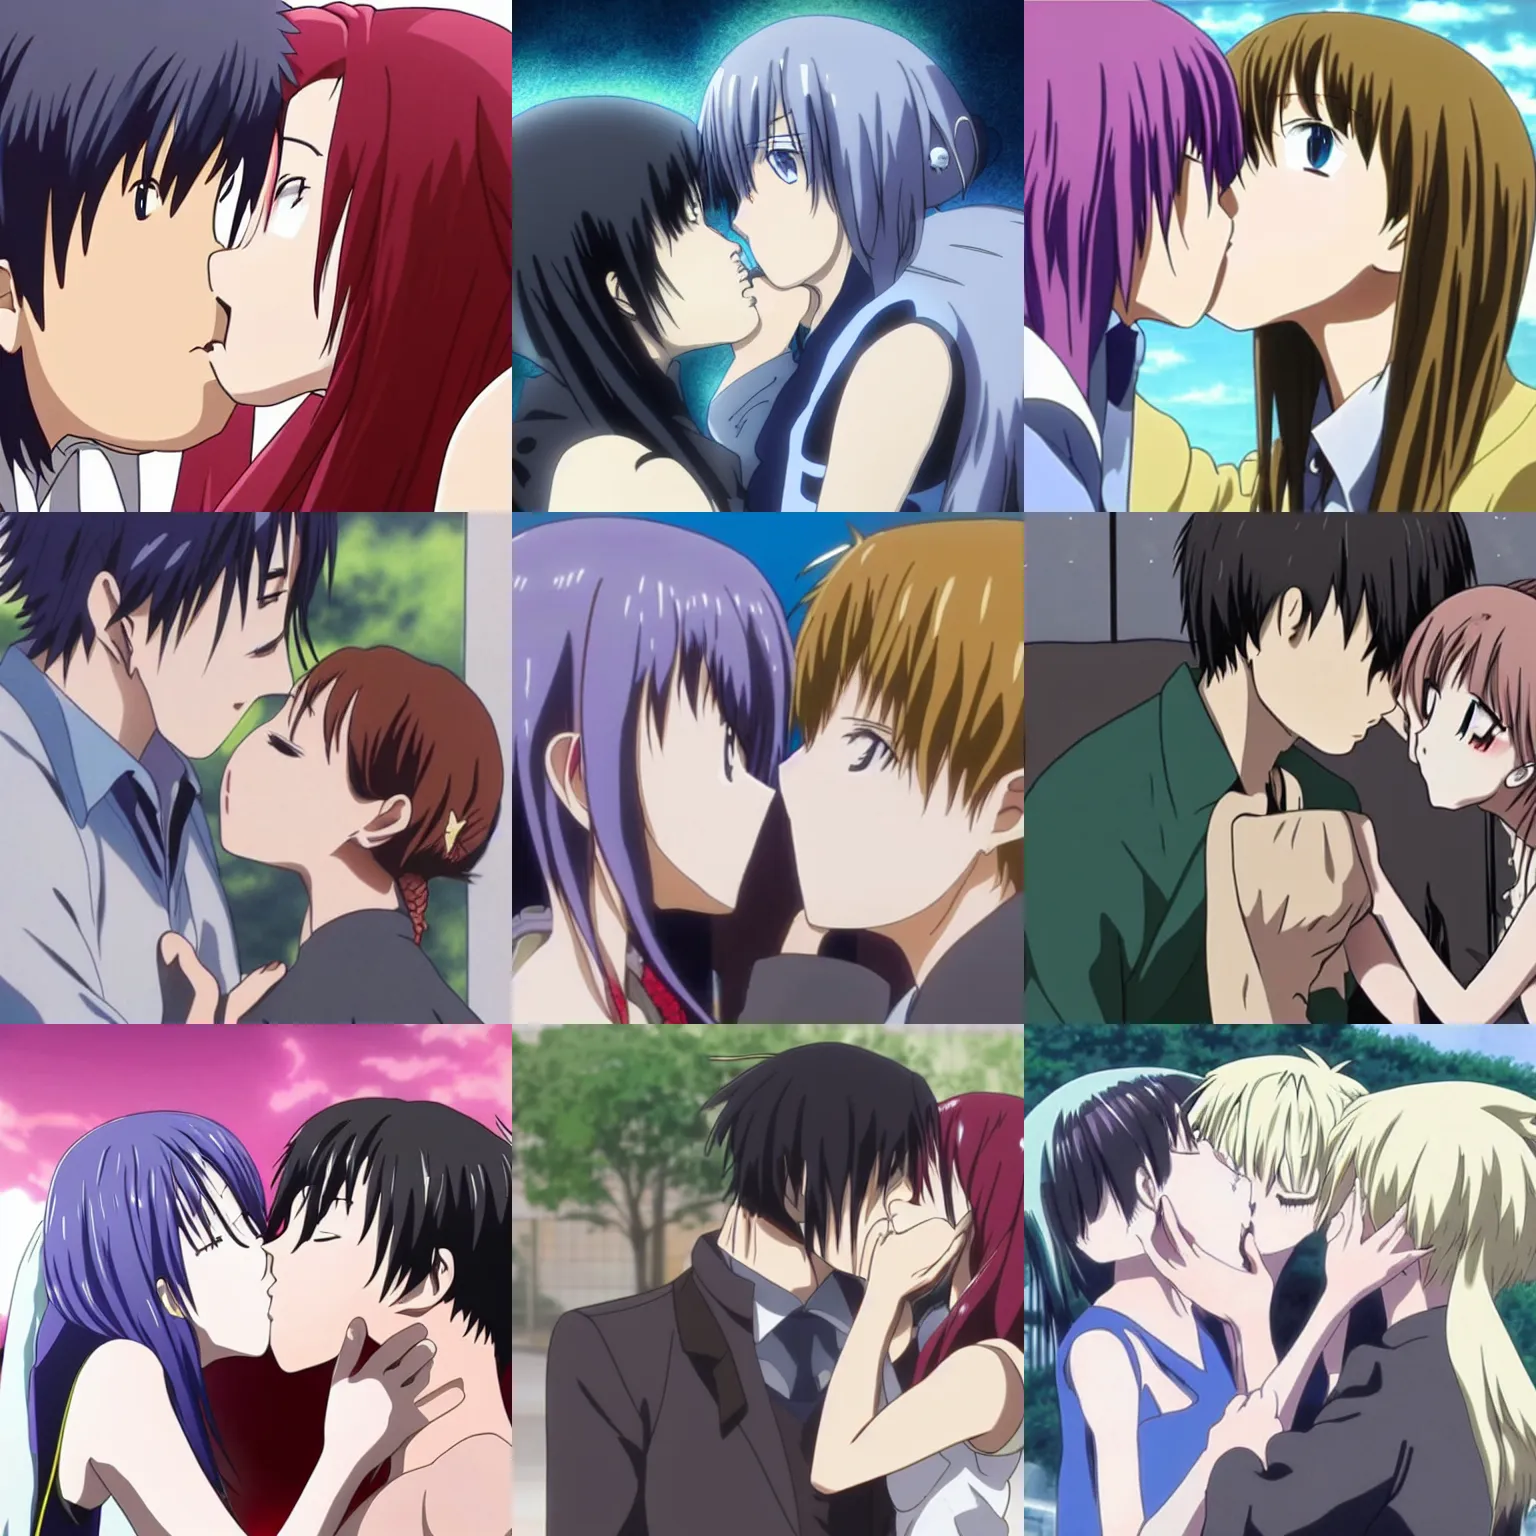 Anime Kisses (LoCon version) - v1, Stable Diffusion LyCORIS